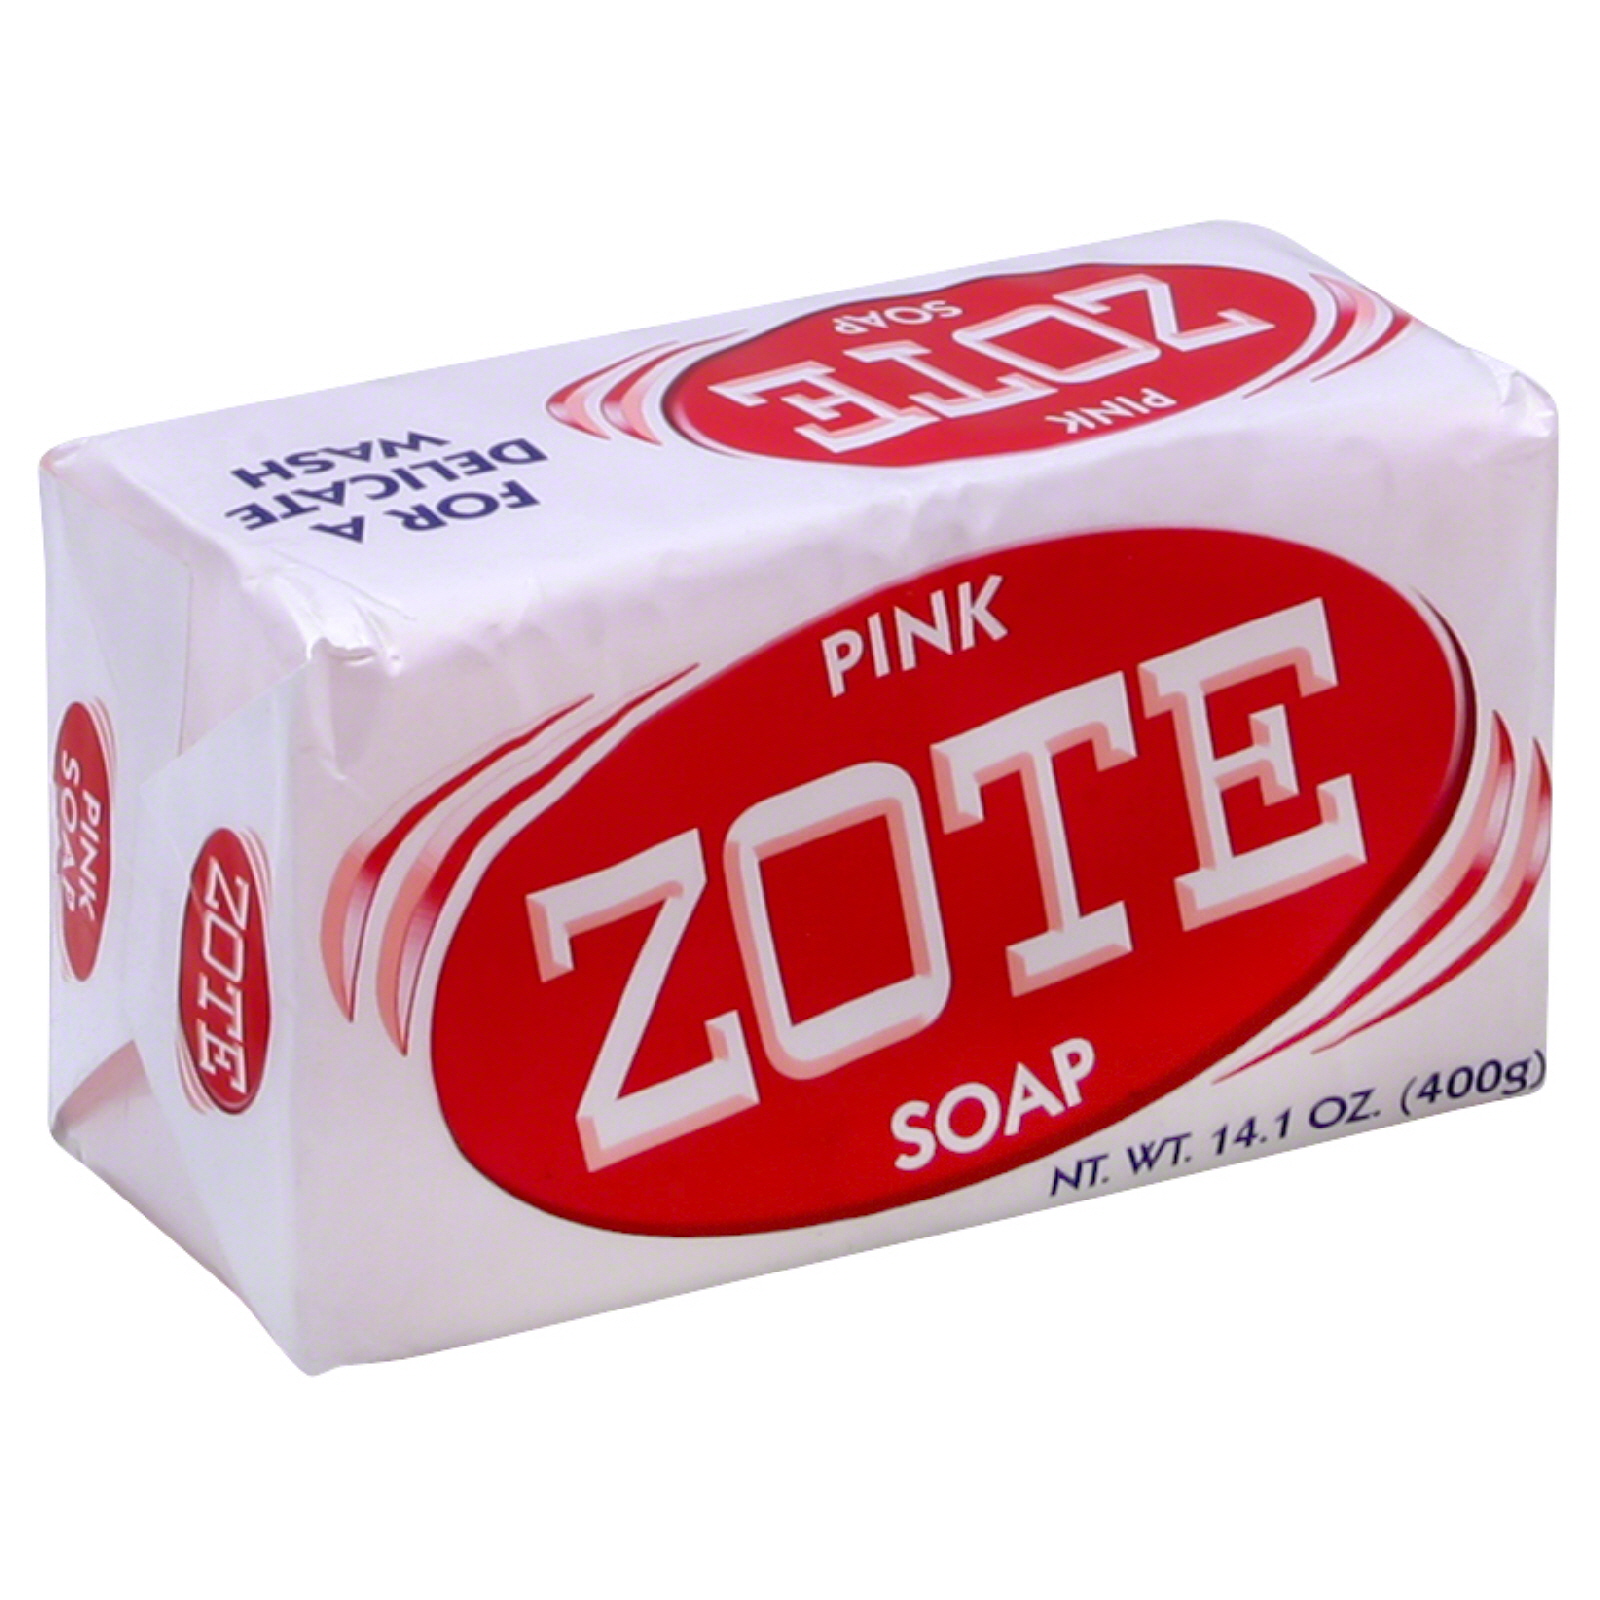 Zote Pink Soap, 14.1 oz (400g)